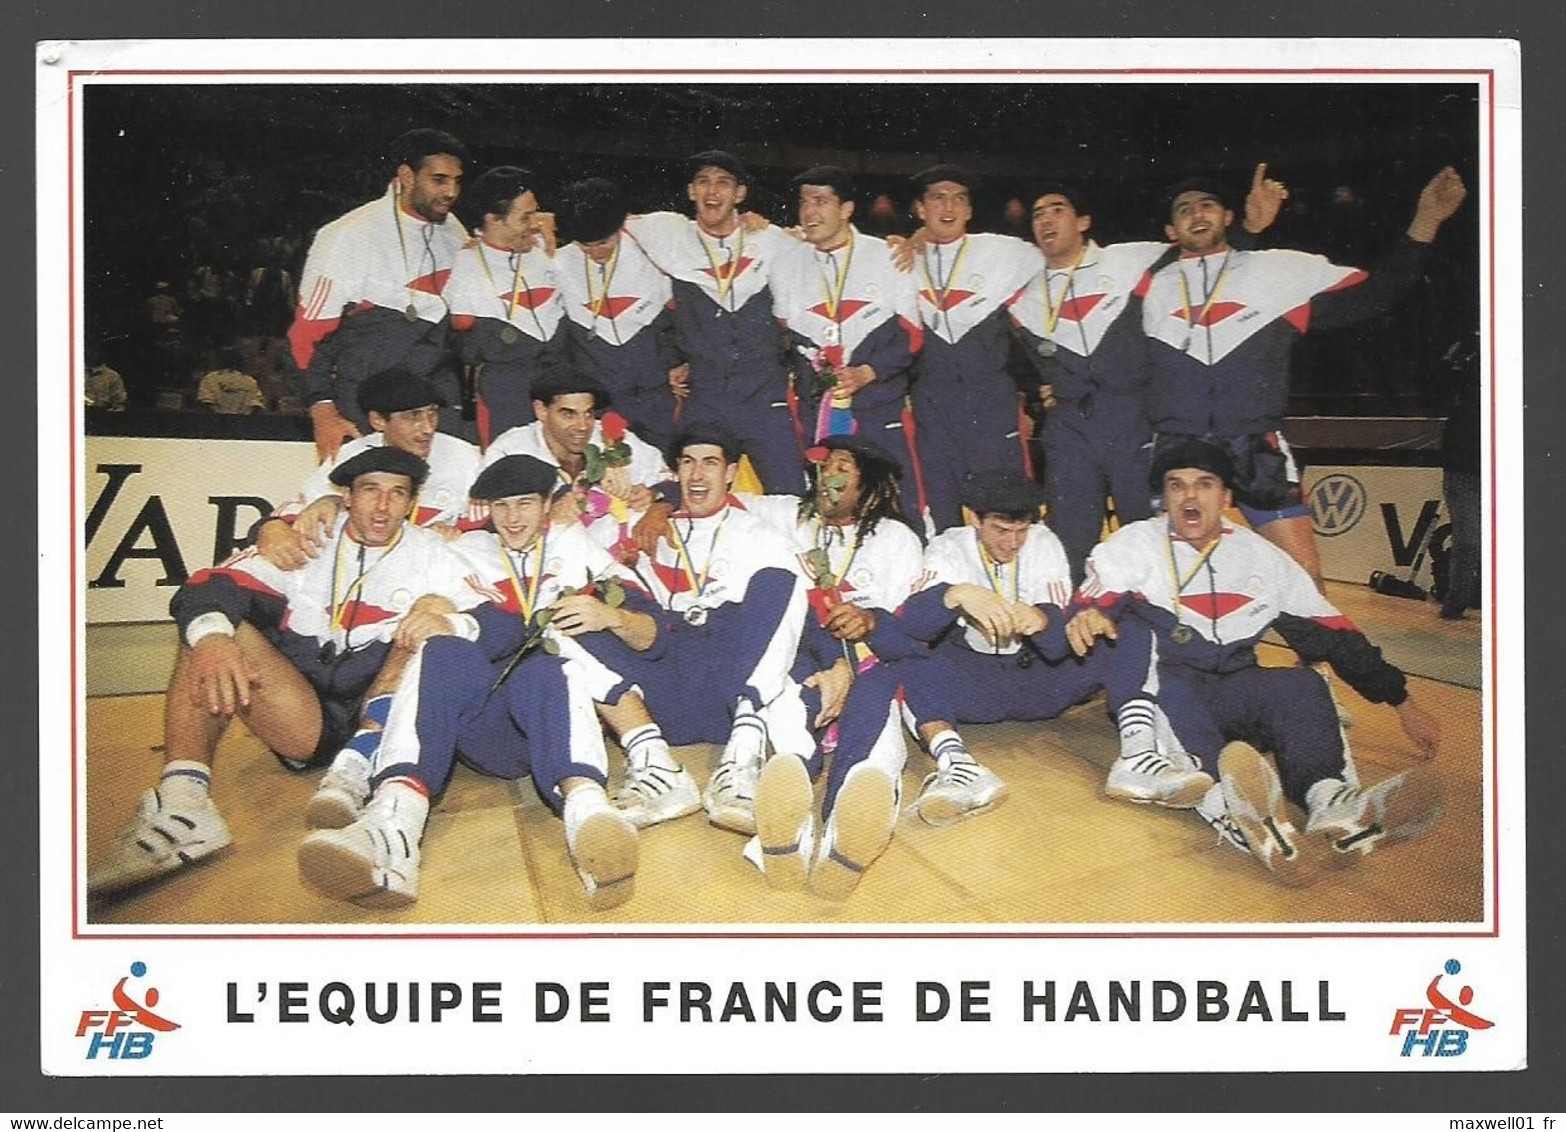 I6 - Equipe De France De Handball 1993 FFHB - Balonmano